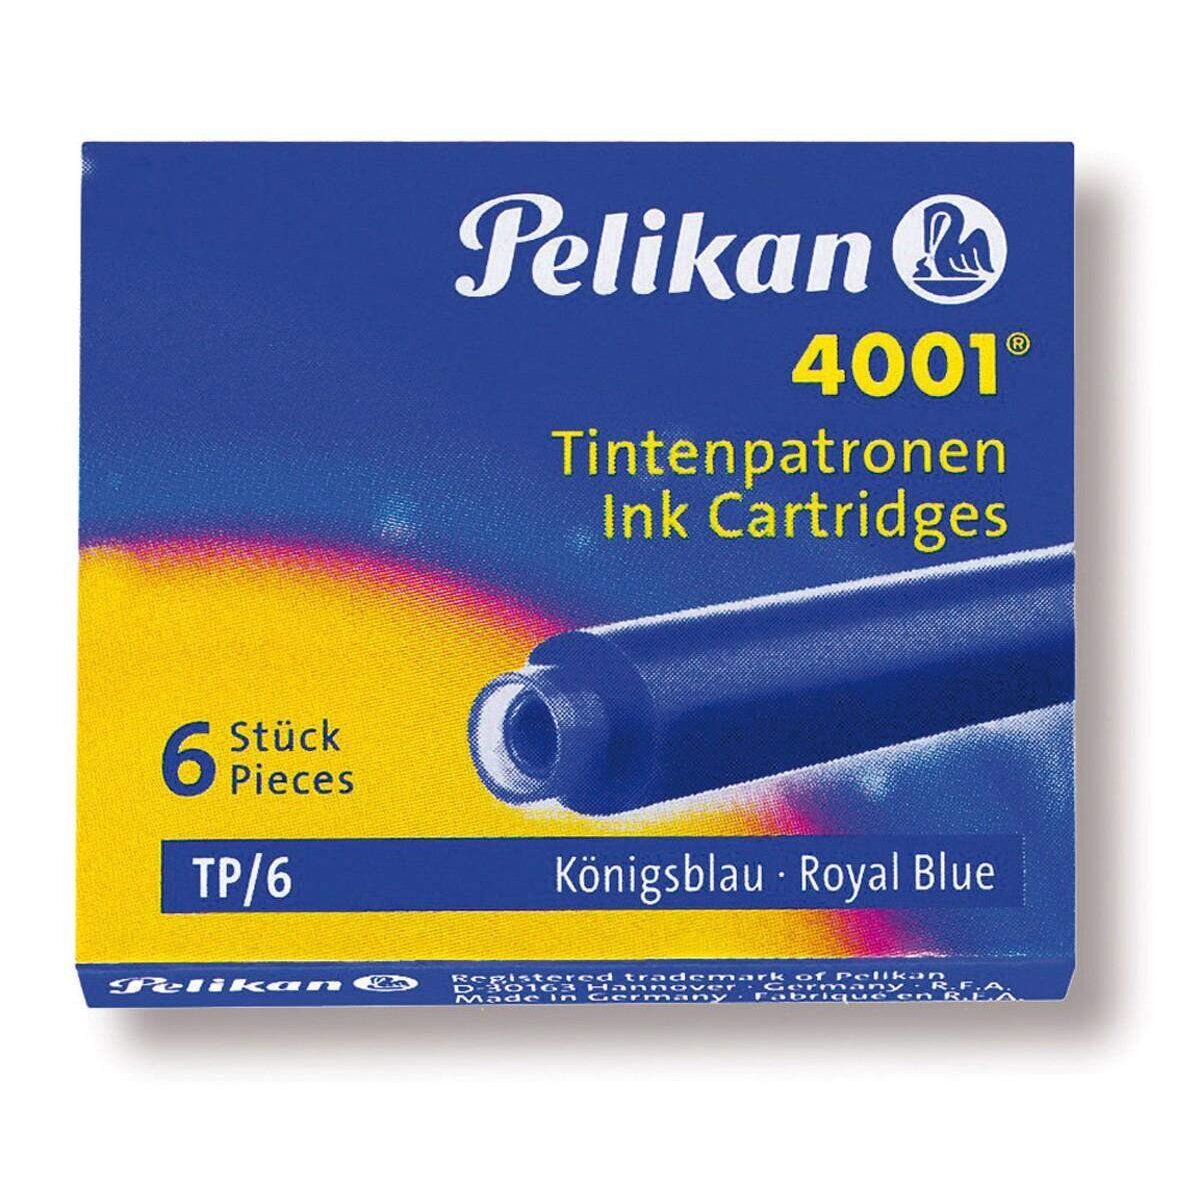 Pelikan Tintenpatrone 4001 TP/6, königsblau, 6 Stück